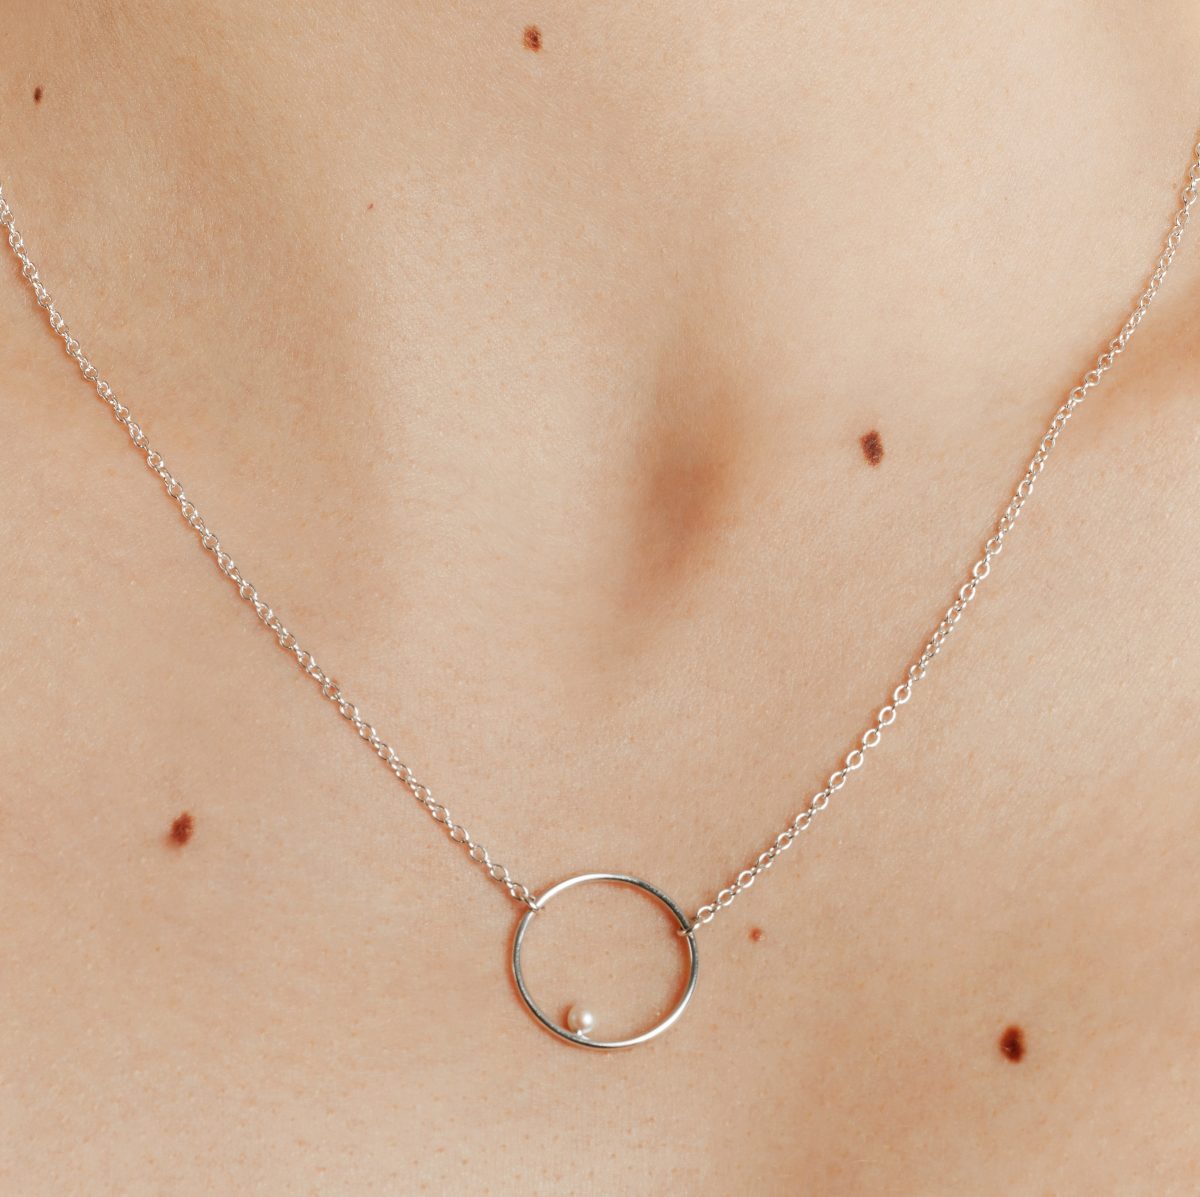 samojauskaite_jewellery_white_pearl_necklace_silver_body